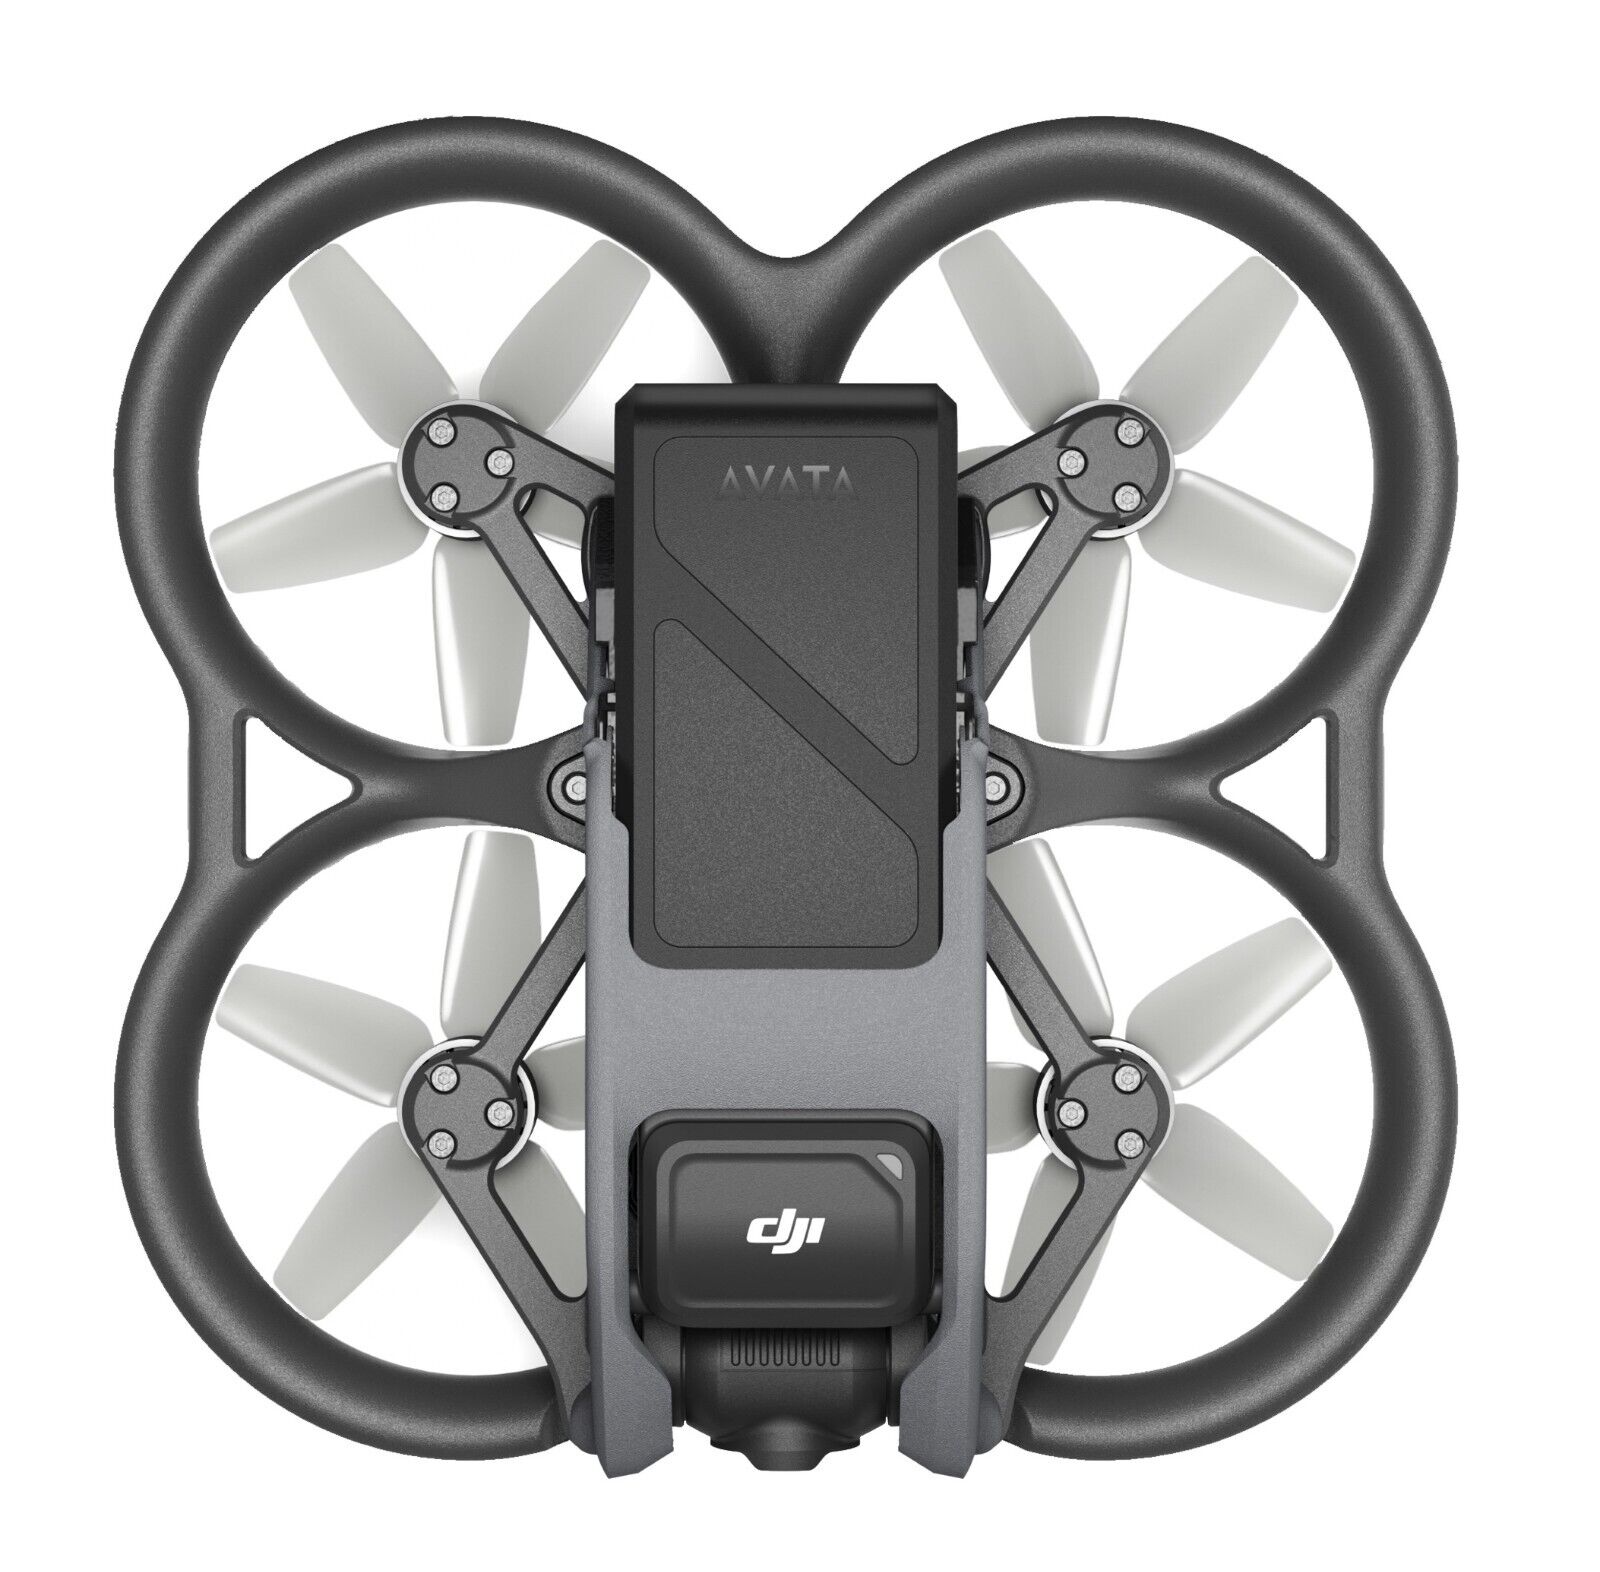 DJI Avata Pro-View Combo FPV Drone | eBay